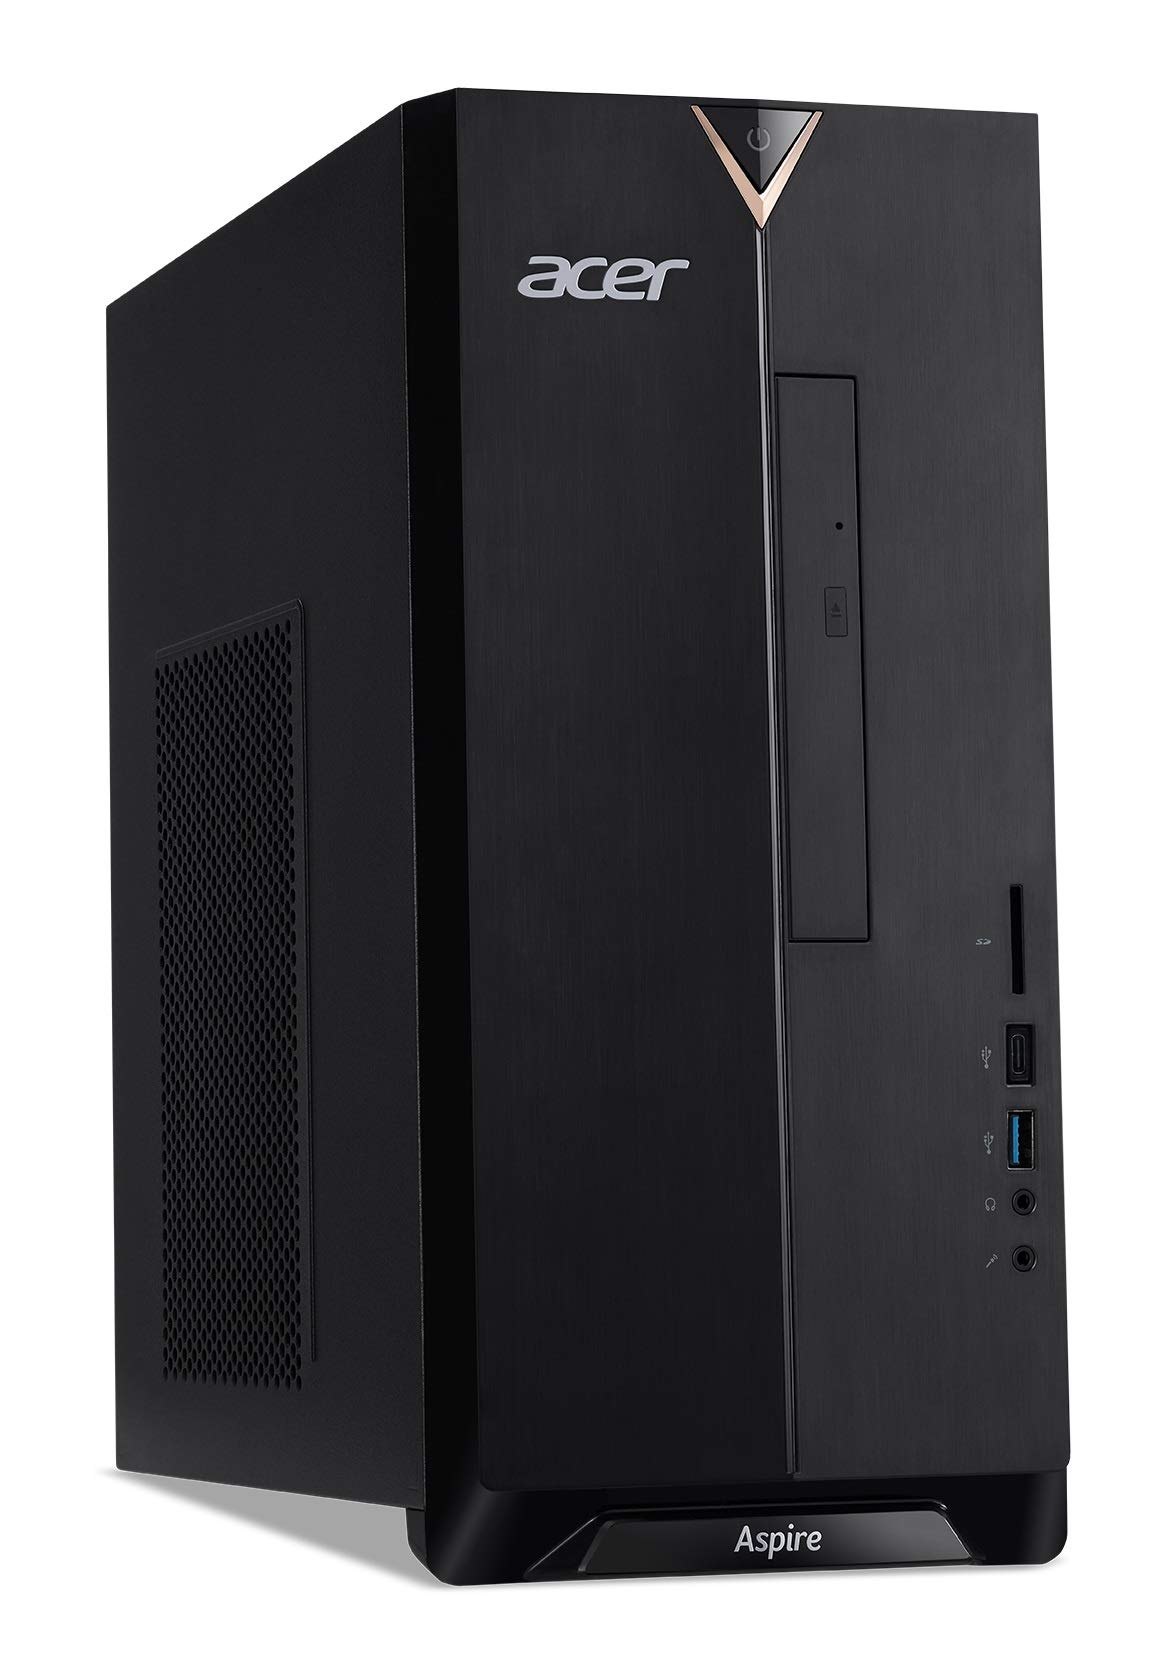 Acer Aspire TC-895-UA92 Desktop, 10th Gen Intel Core i5-10400 6-Core Processor, 12GB 2666MHz DDR4, 512GB NVMe M.2 SSD, 8X DVD, 802.11ax Wi-Fi 6, USB 3.2 Type C, Windows 10 Home